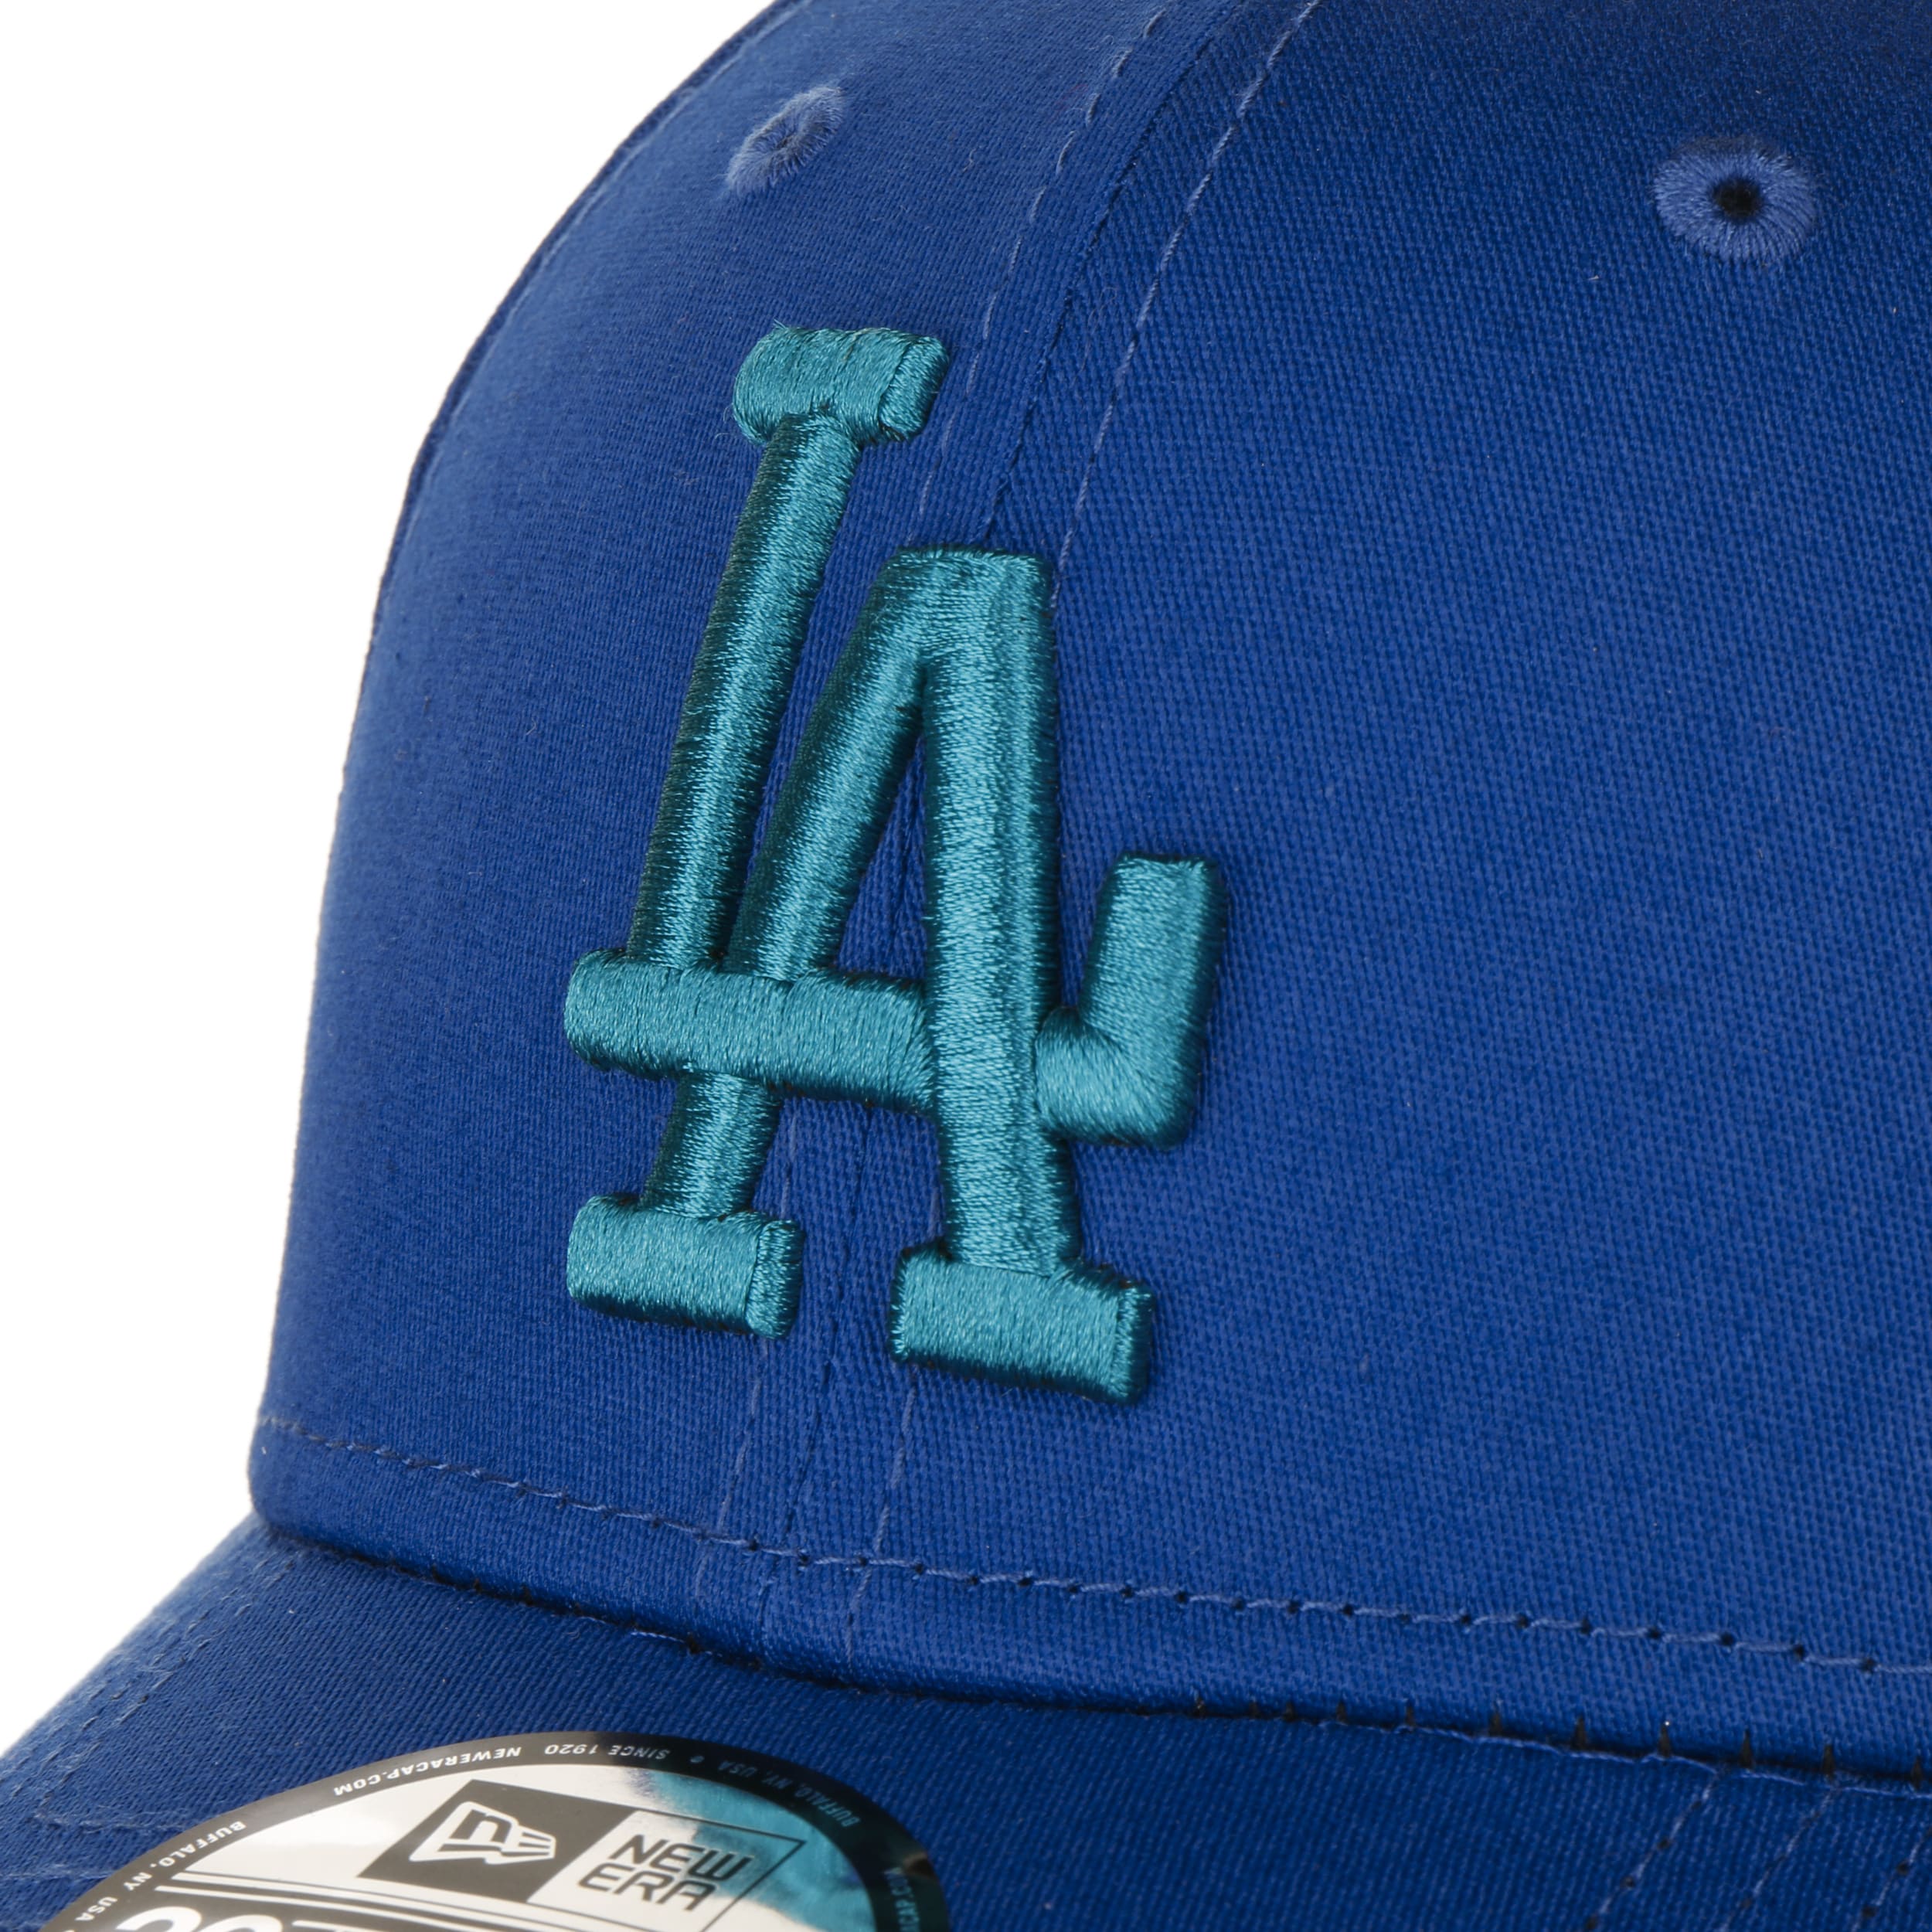 Mens Los Angeles Dodgers Casquettes de baseball, Dodgers Casquettes,  Dodgers Chapeau, bonnets